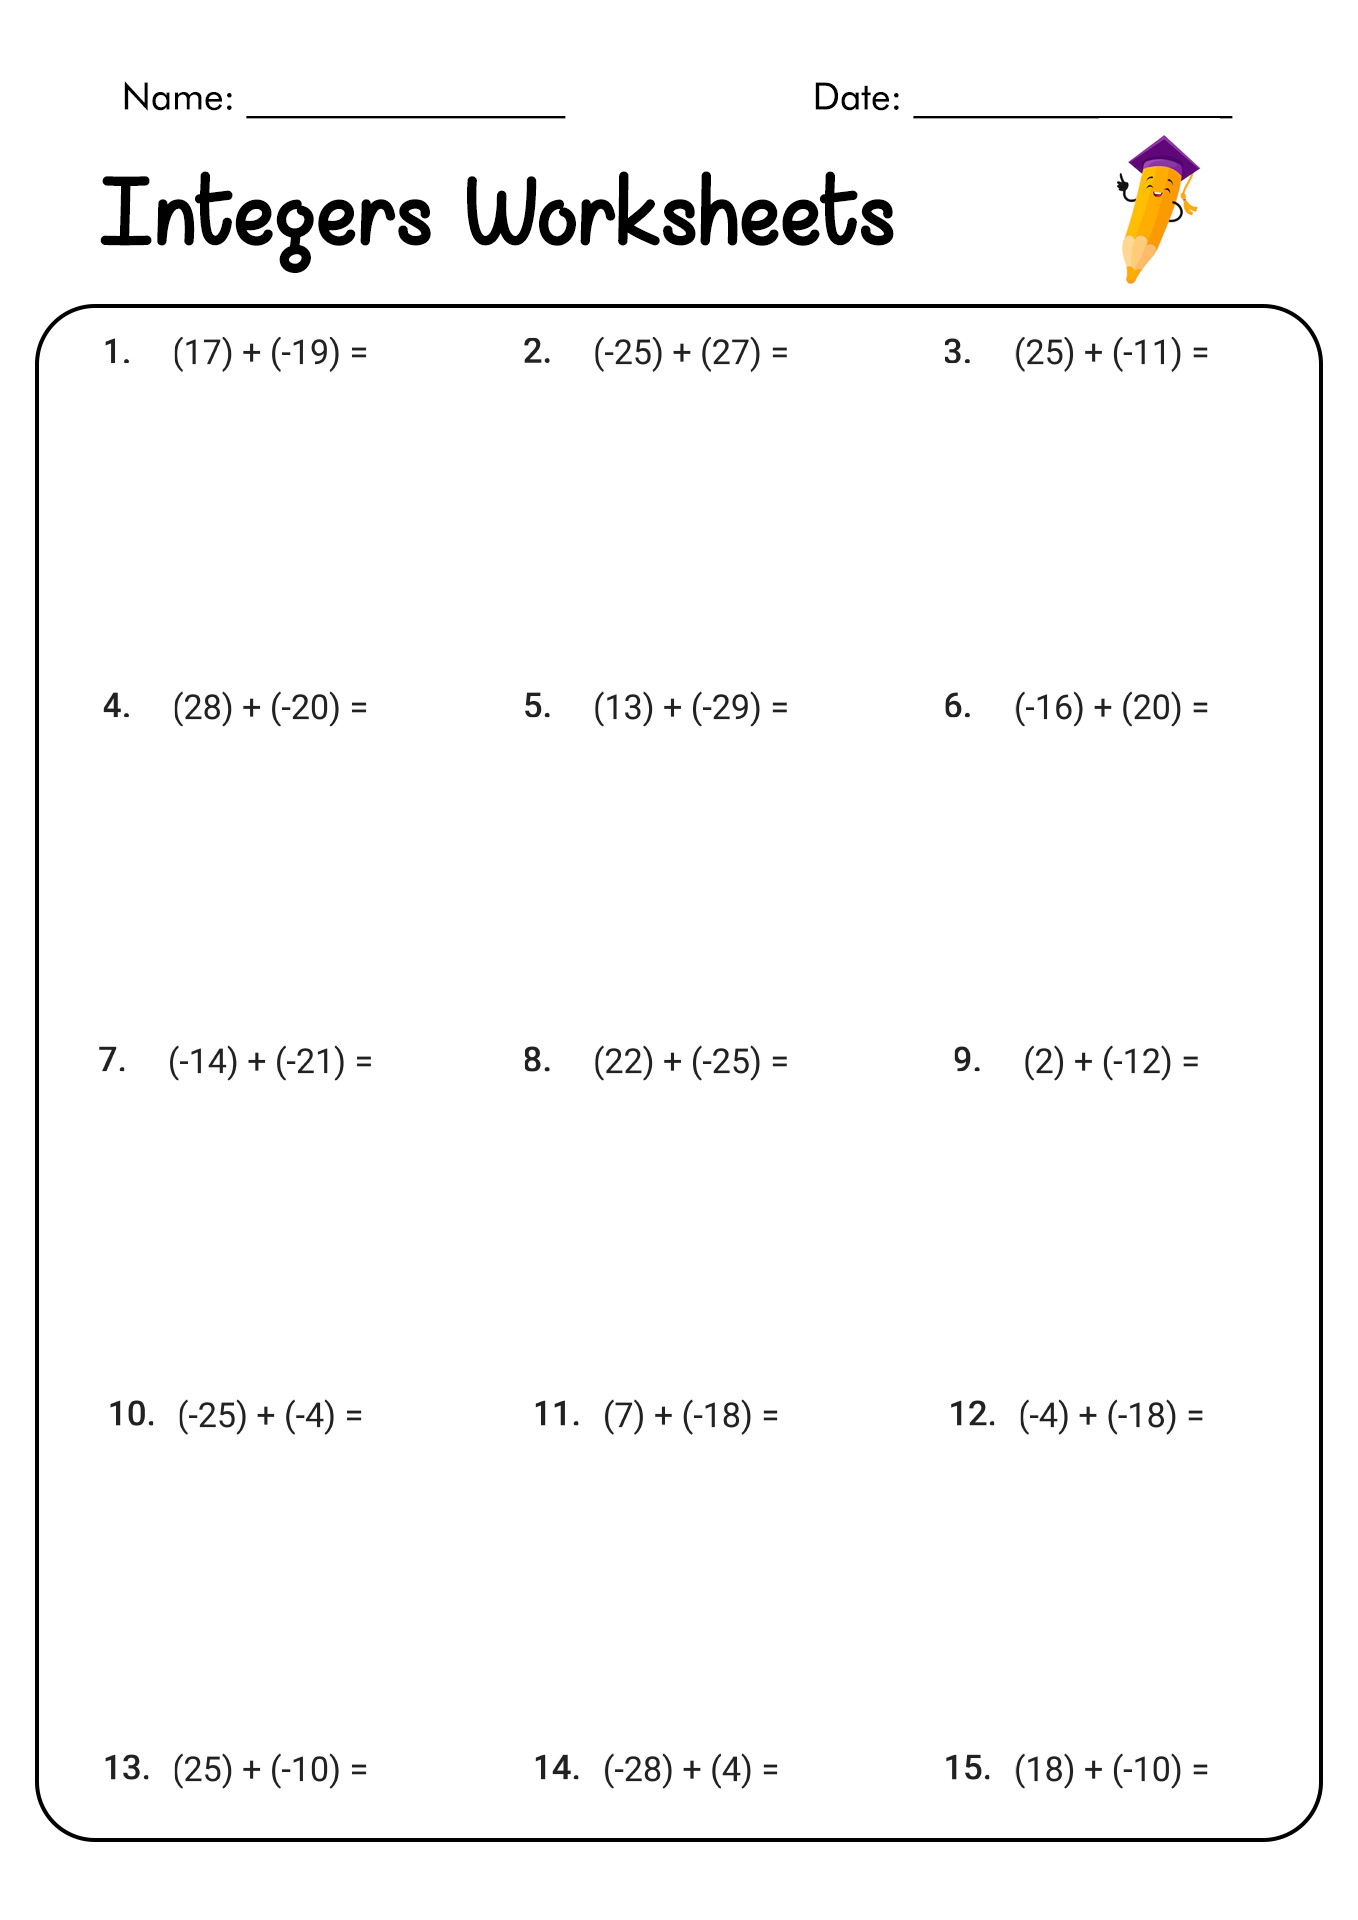 general-adding-negative-numbers-worksheet